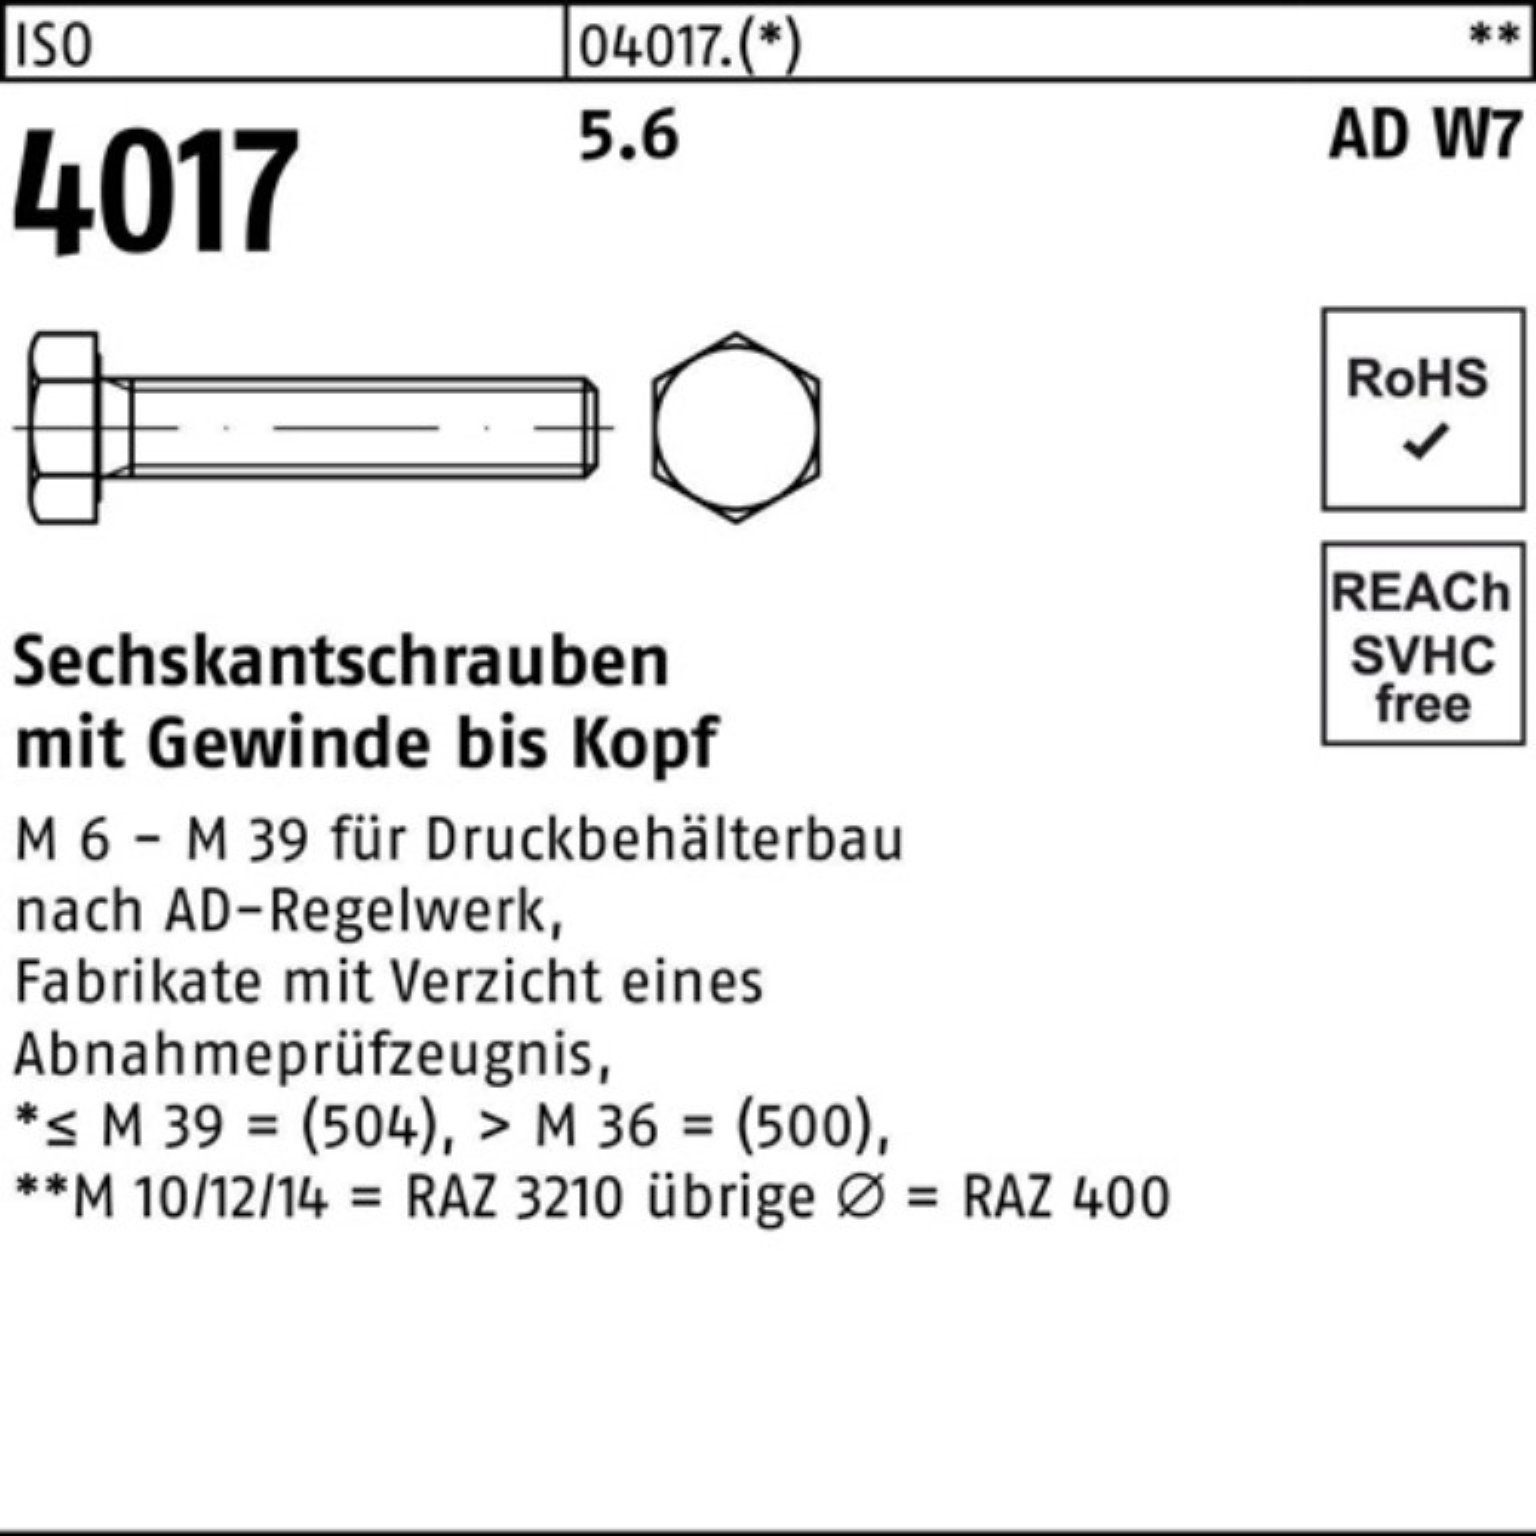 Bufab Sechskantschraube 200er Pack Sechskantschraube M6x 4017 Stück AD 40 5.6 VG W7 I 200 ISO